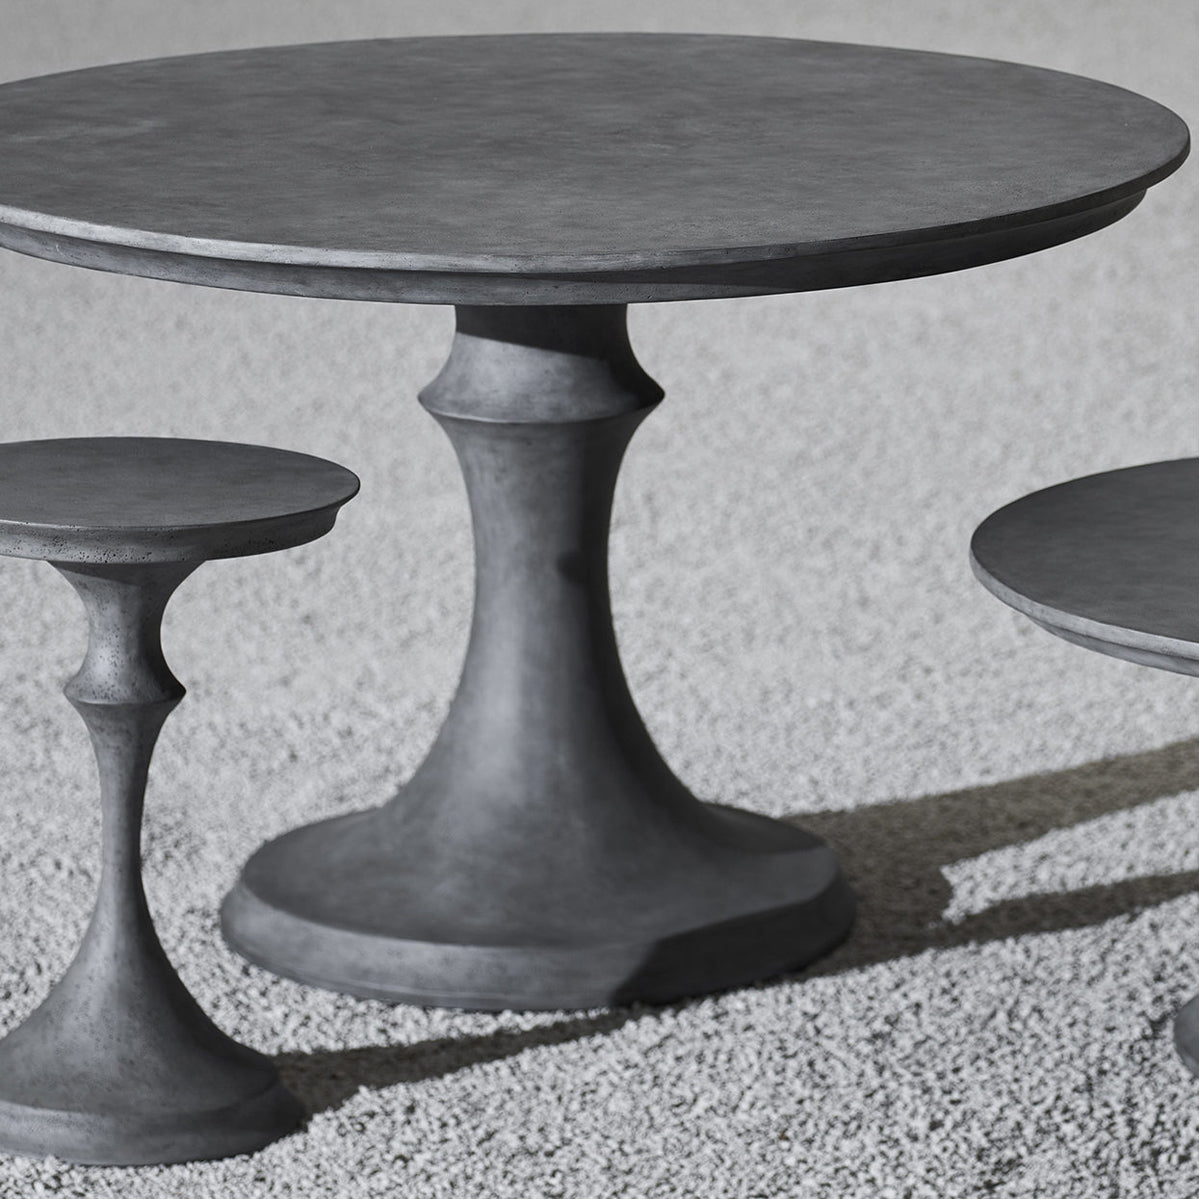 Palecek Spruce Outdoor Dining Table, Grey